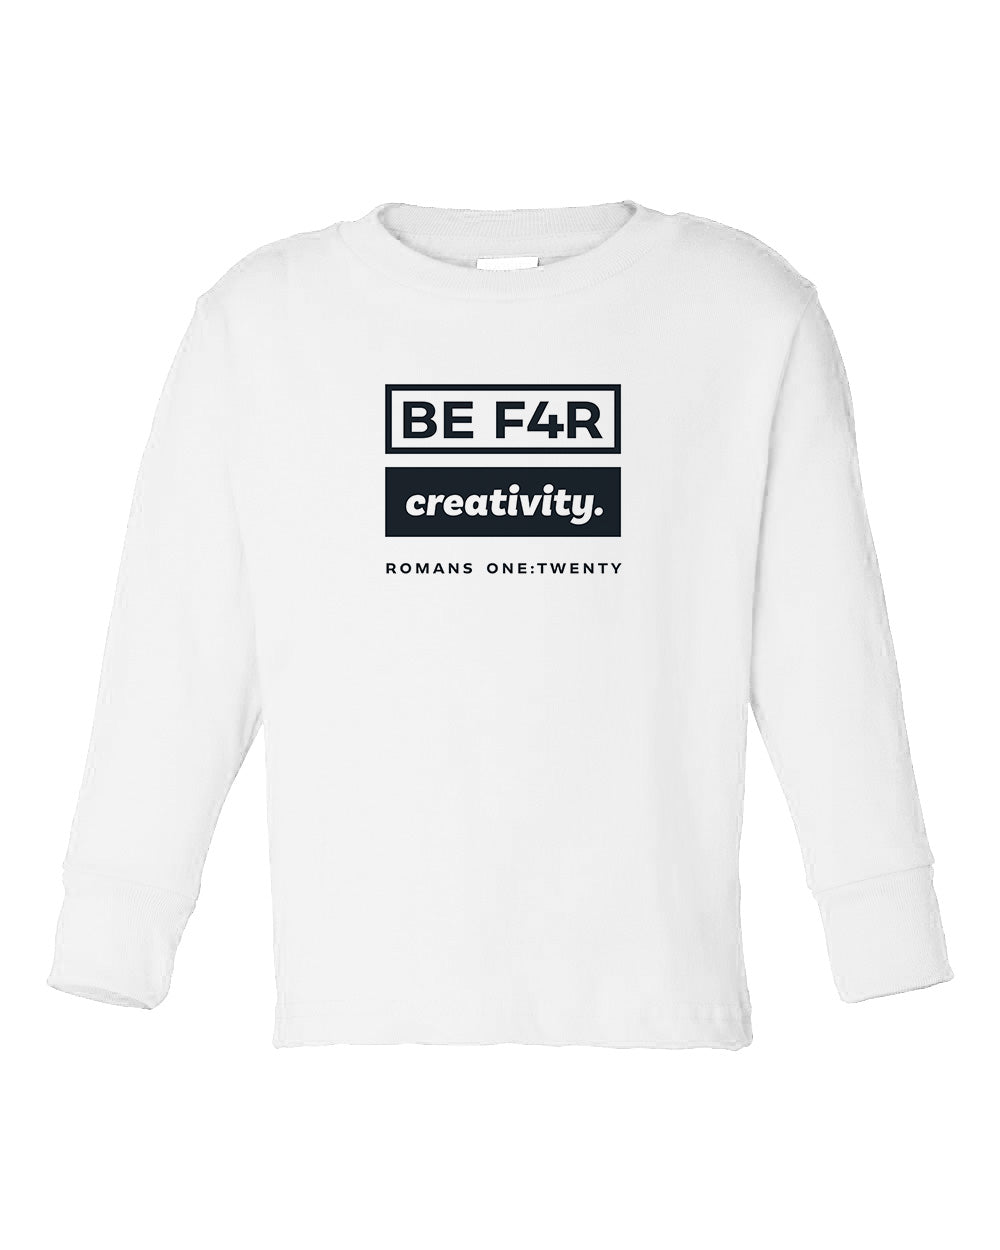 BE F4R Creativity 2 Toddler Long Sleeve